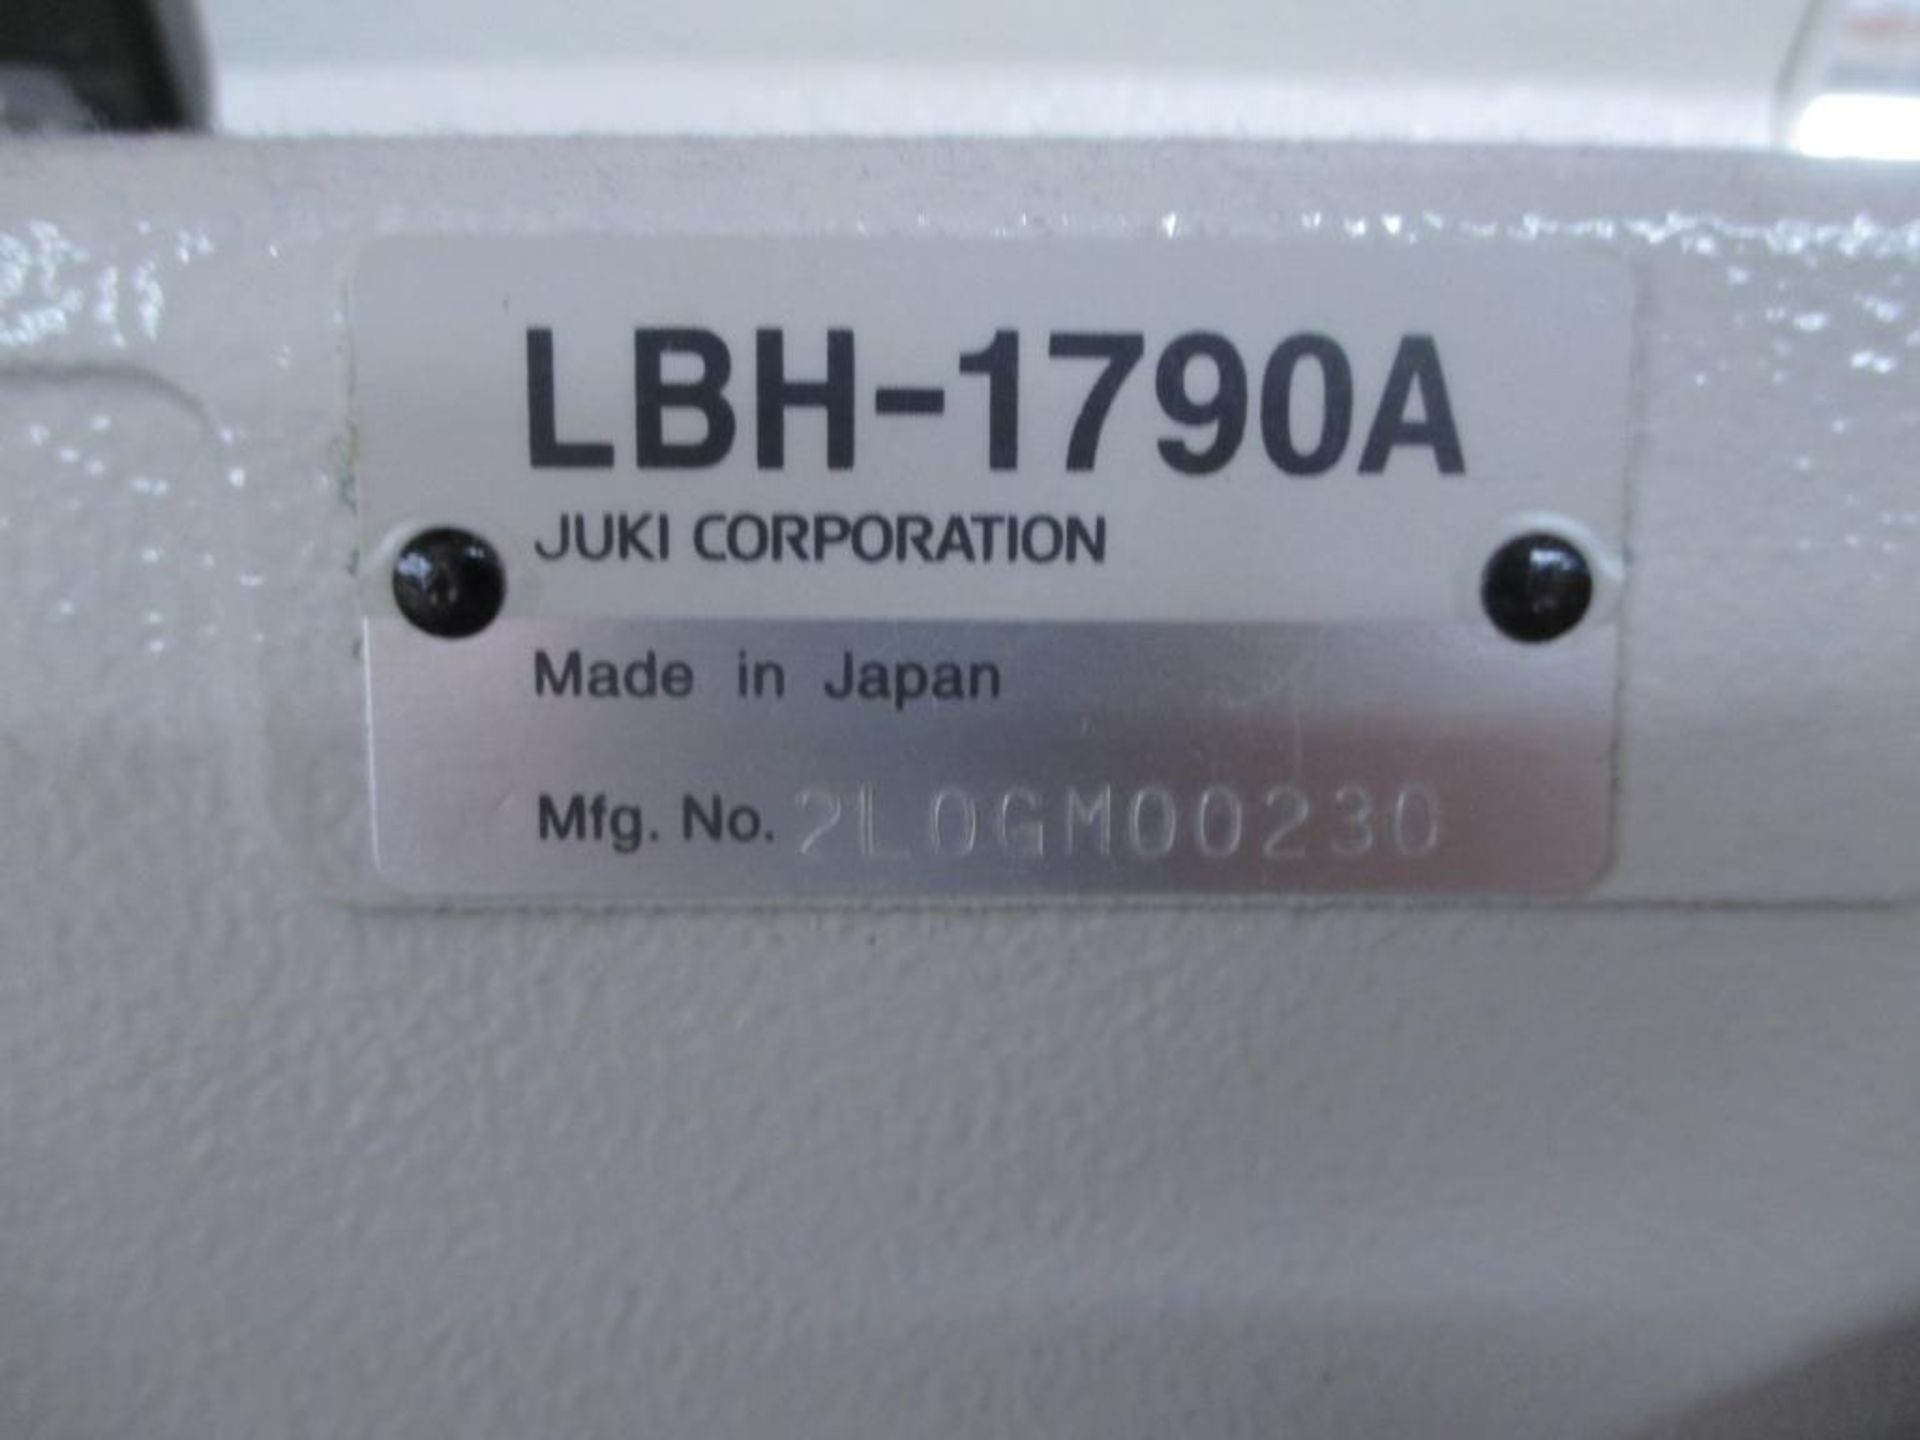 Lockstitch Buttonholing Machine. Juki LBH-1790A Computer-controlled, High-speed, Lockstitch - Image 4 of 6